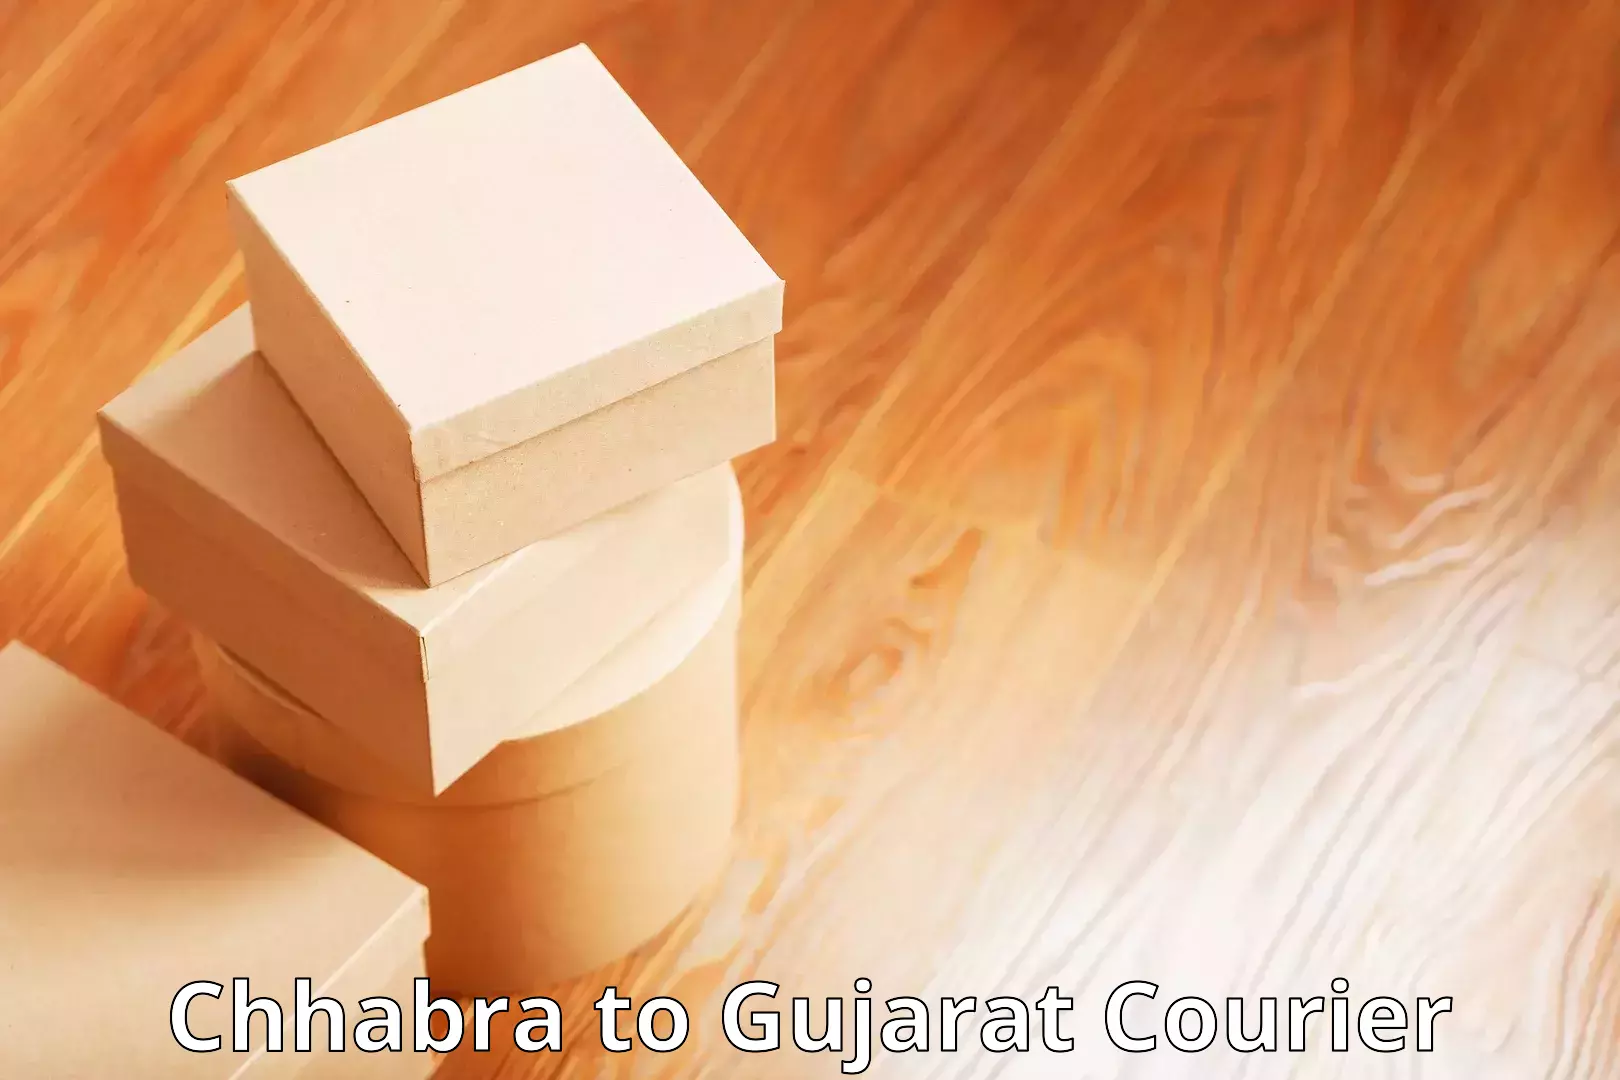 Courier app Chhabra to Gujarat